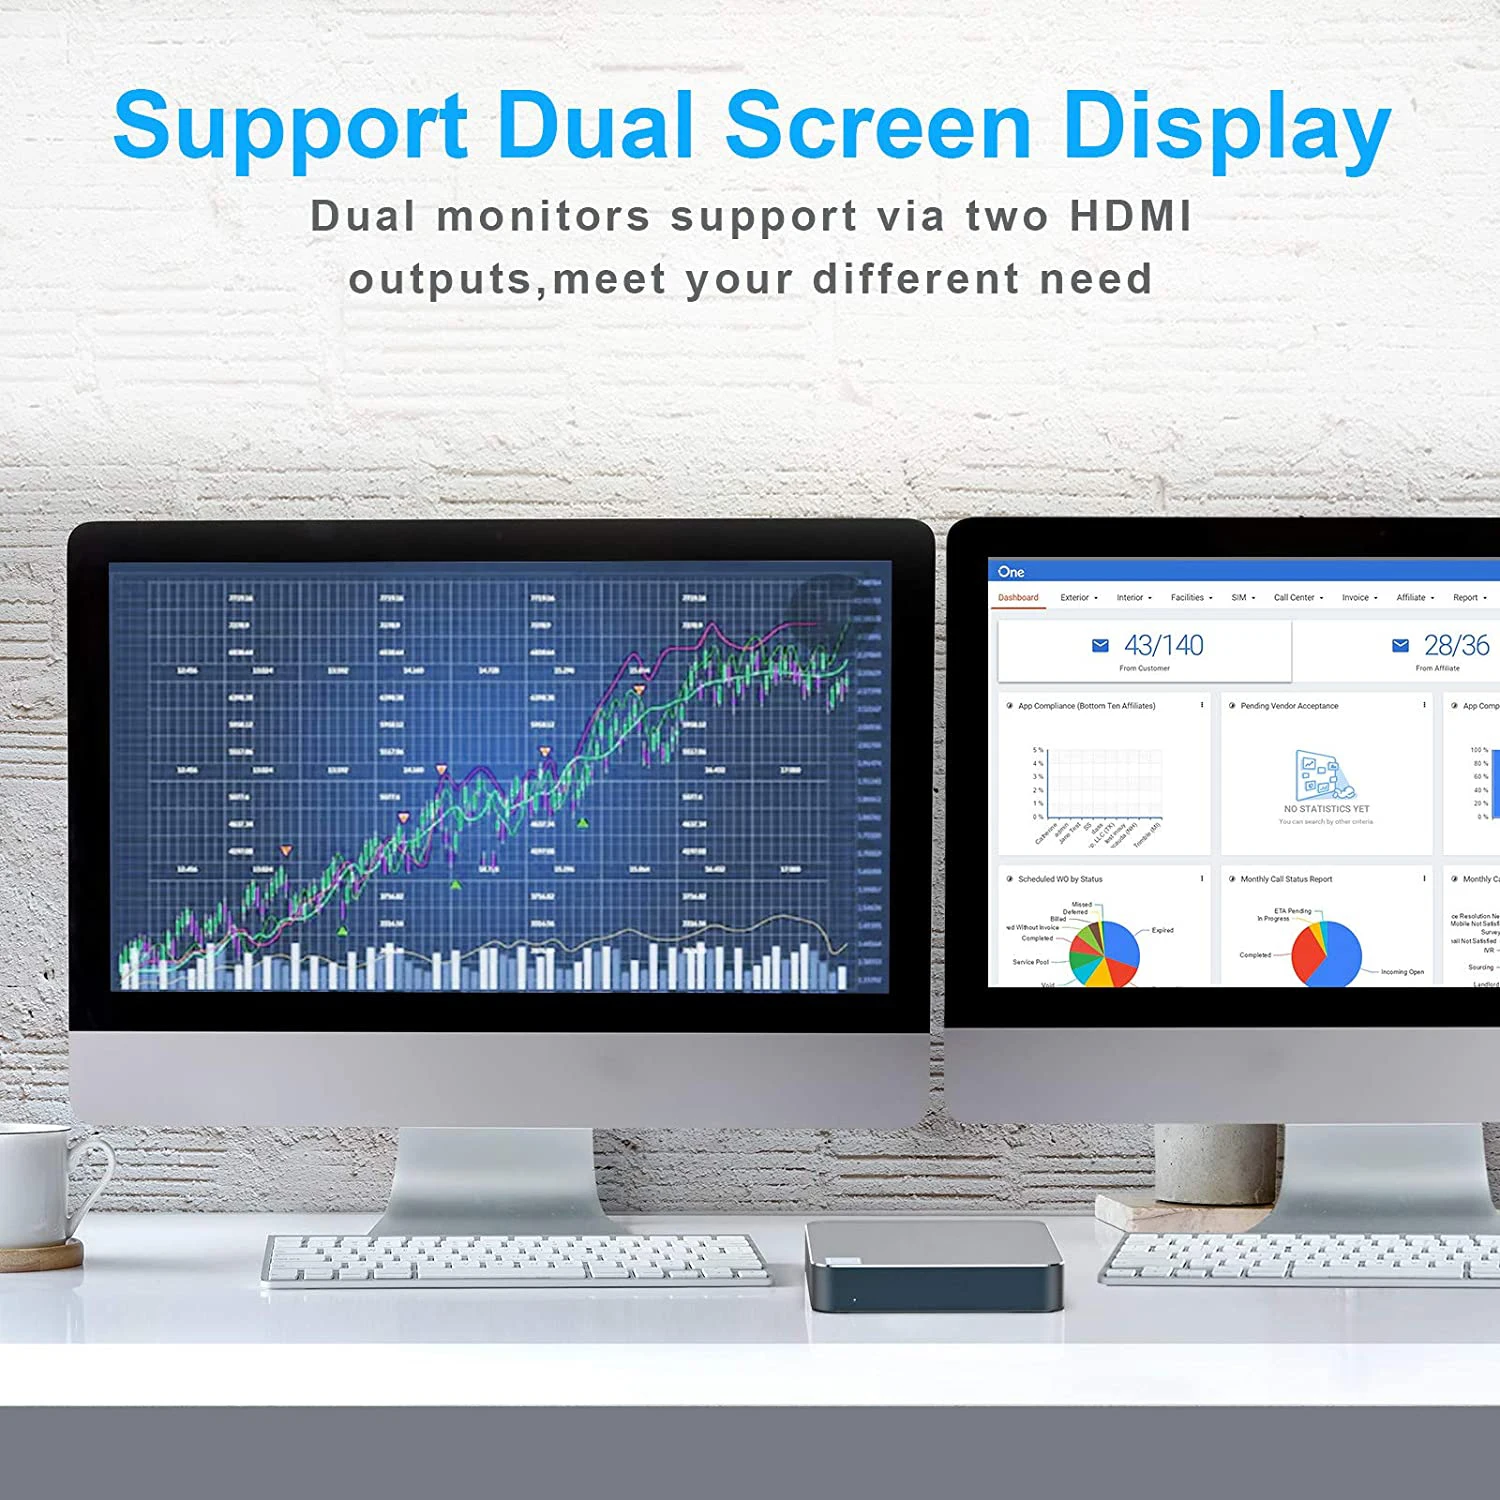 support dual screen display mini copmuter.jpg